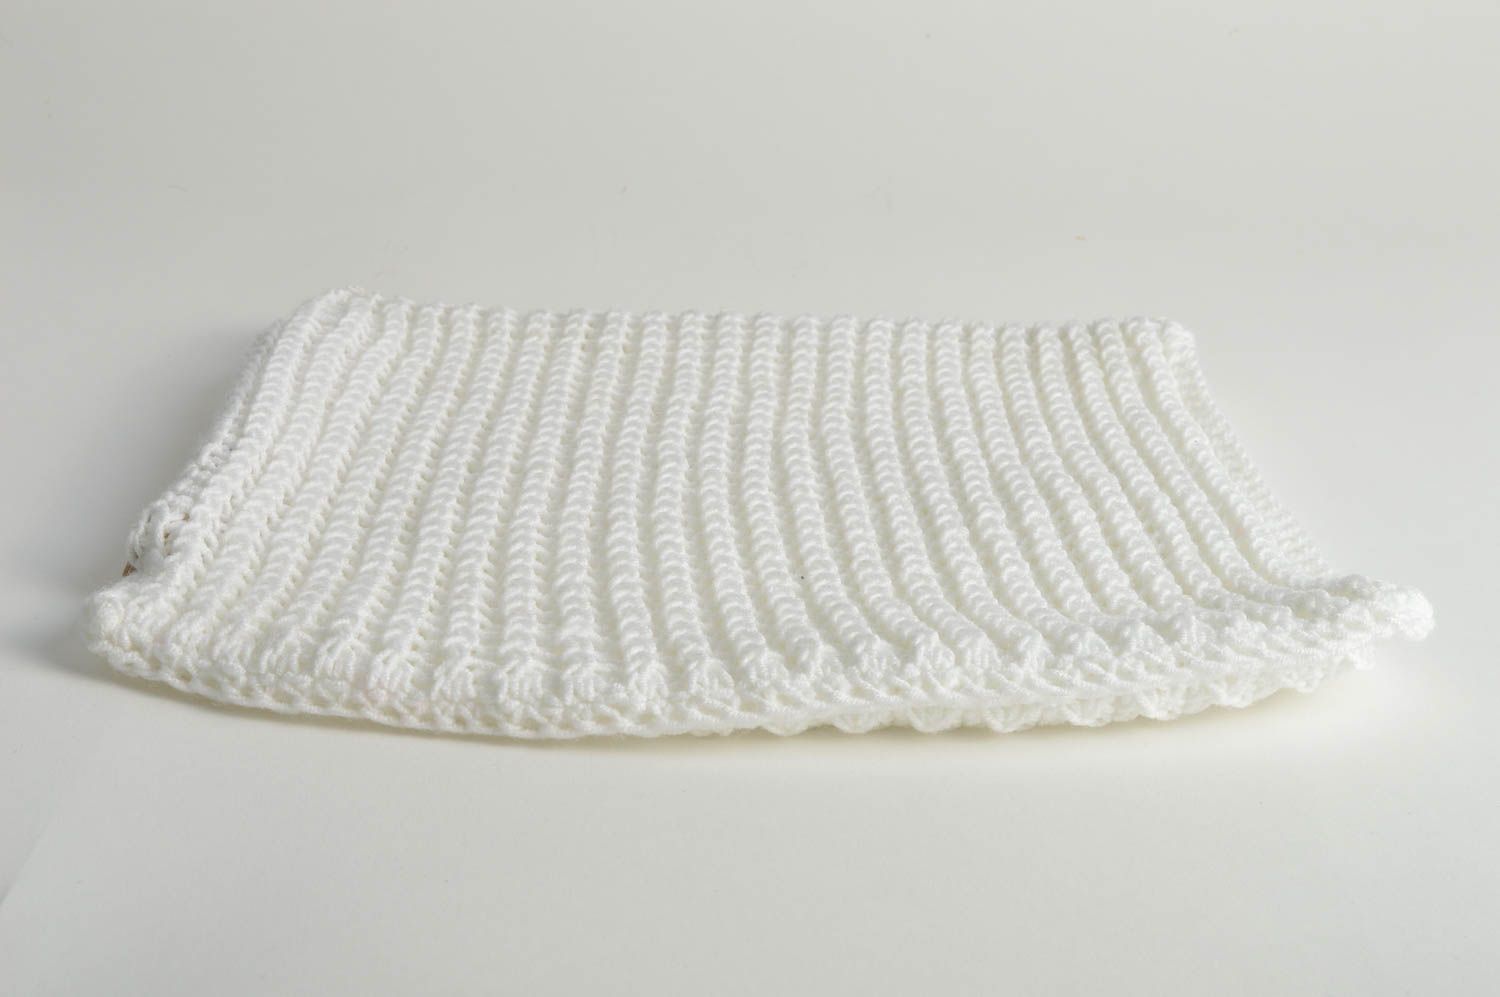 Small stylish beautiful handmade white knitted pillowcase designer accessory photo 5